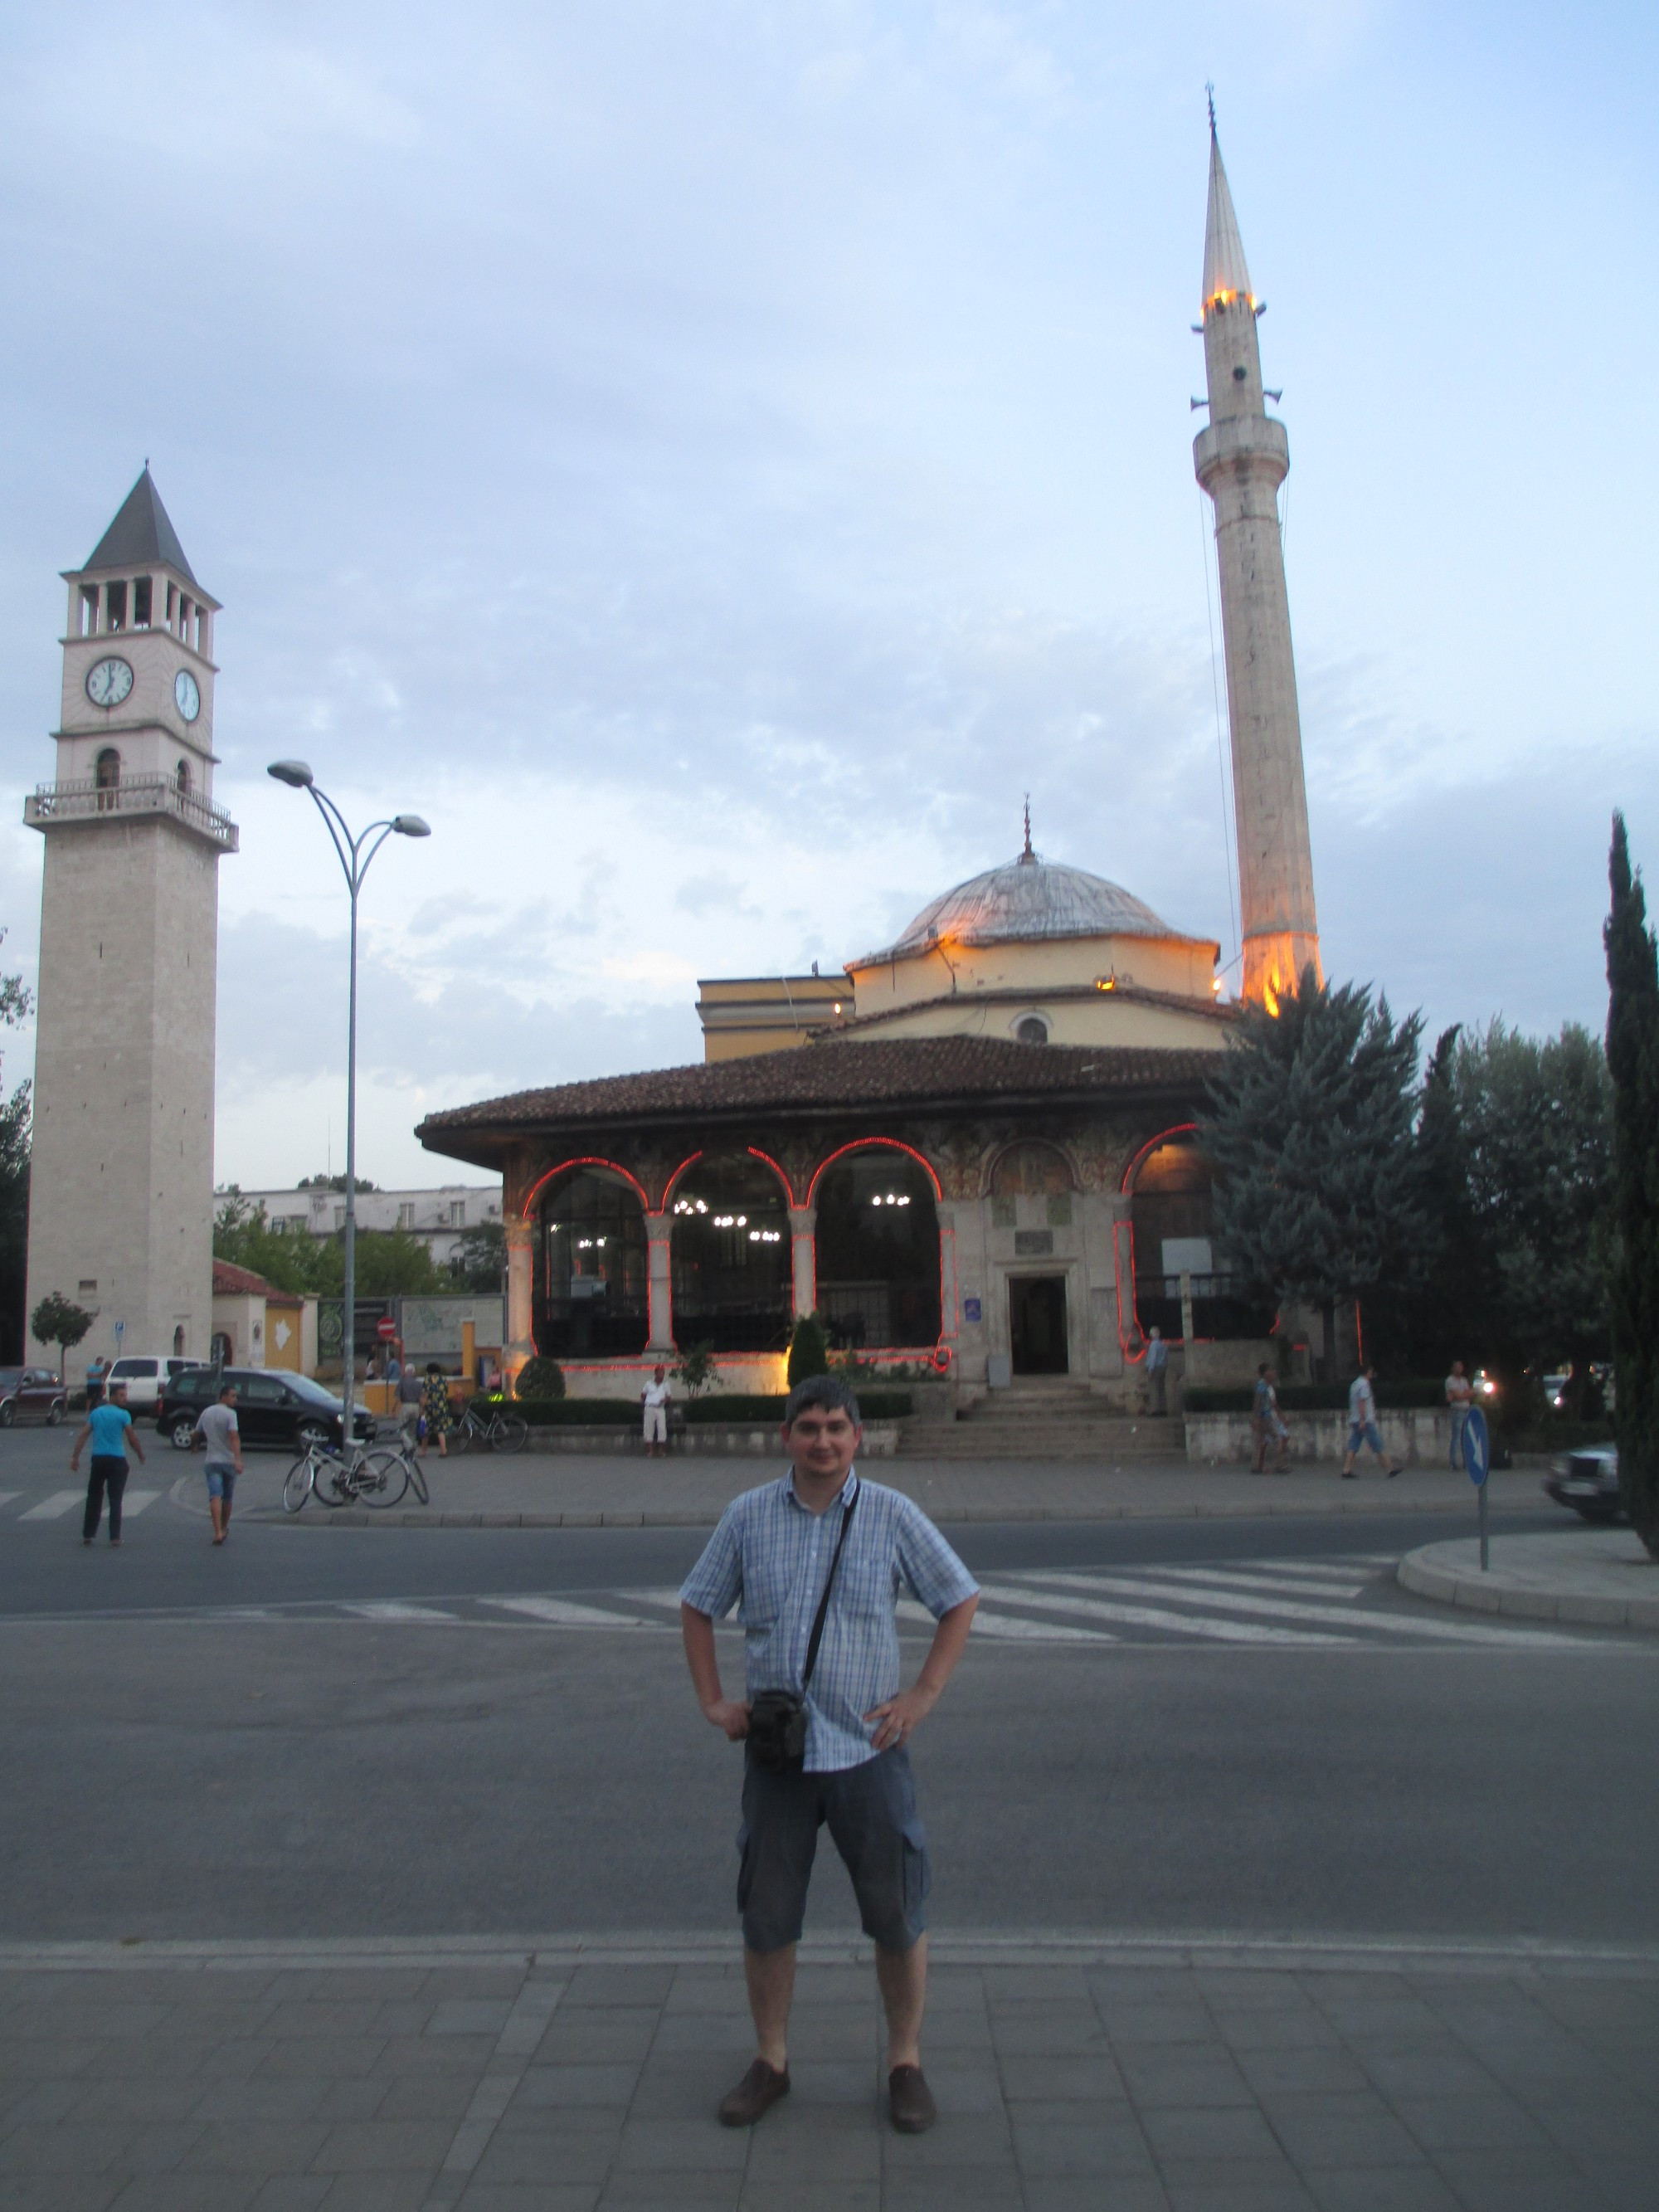 Тирана. Я на фоне мечети Эфем-бея и часовой башни. (05.09.2015)